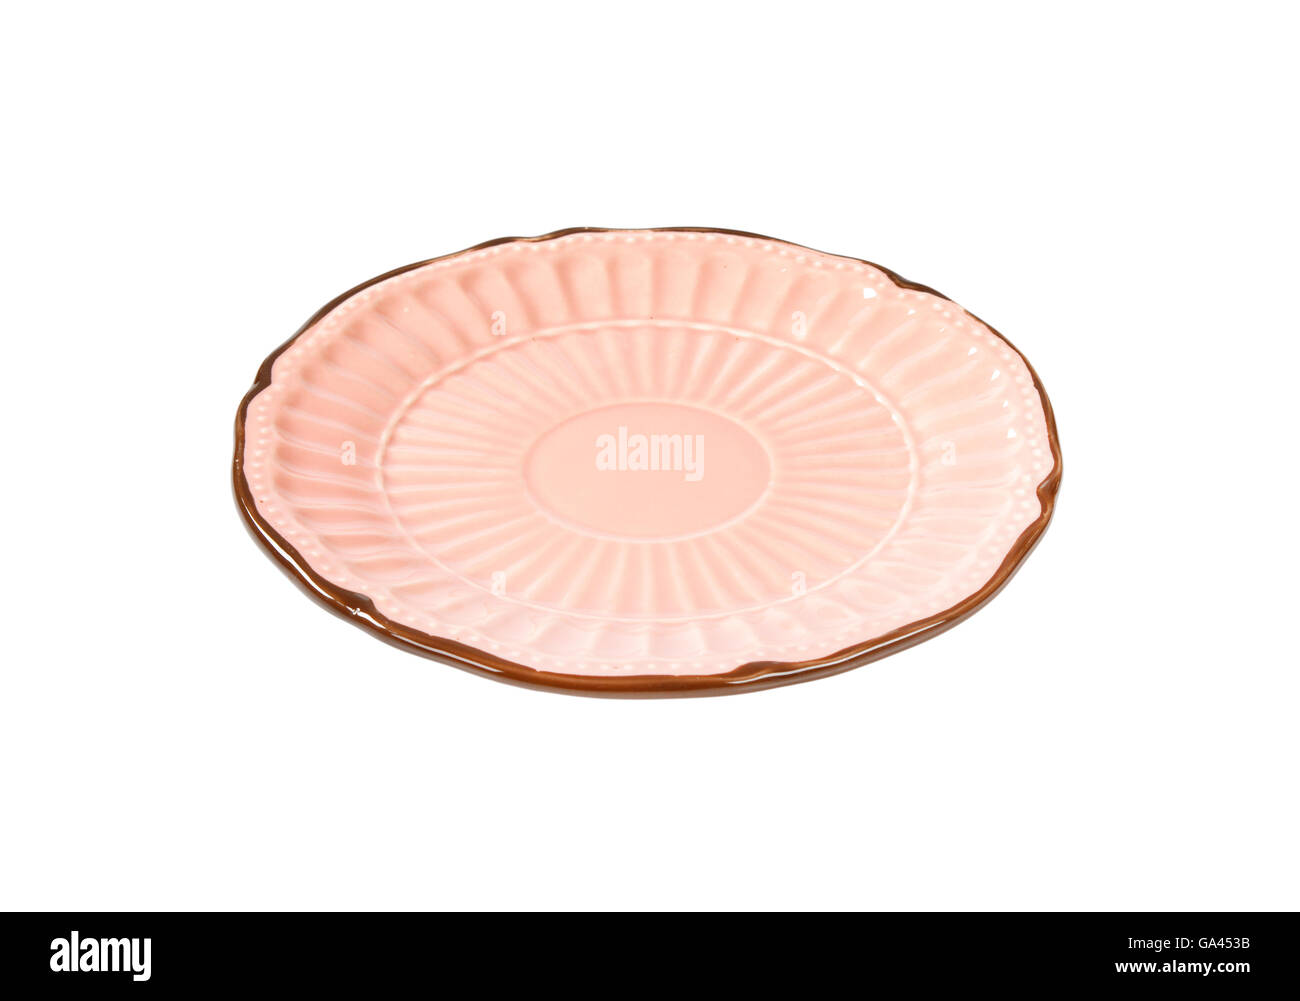 Antique decorative pink dessert plate Stock Photo